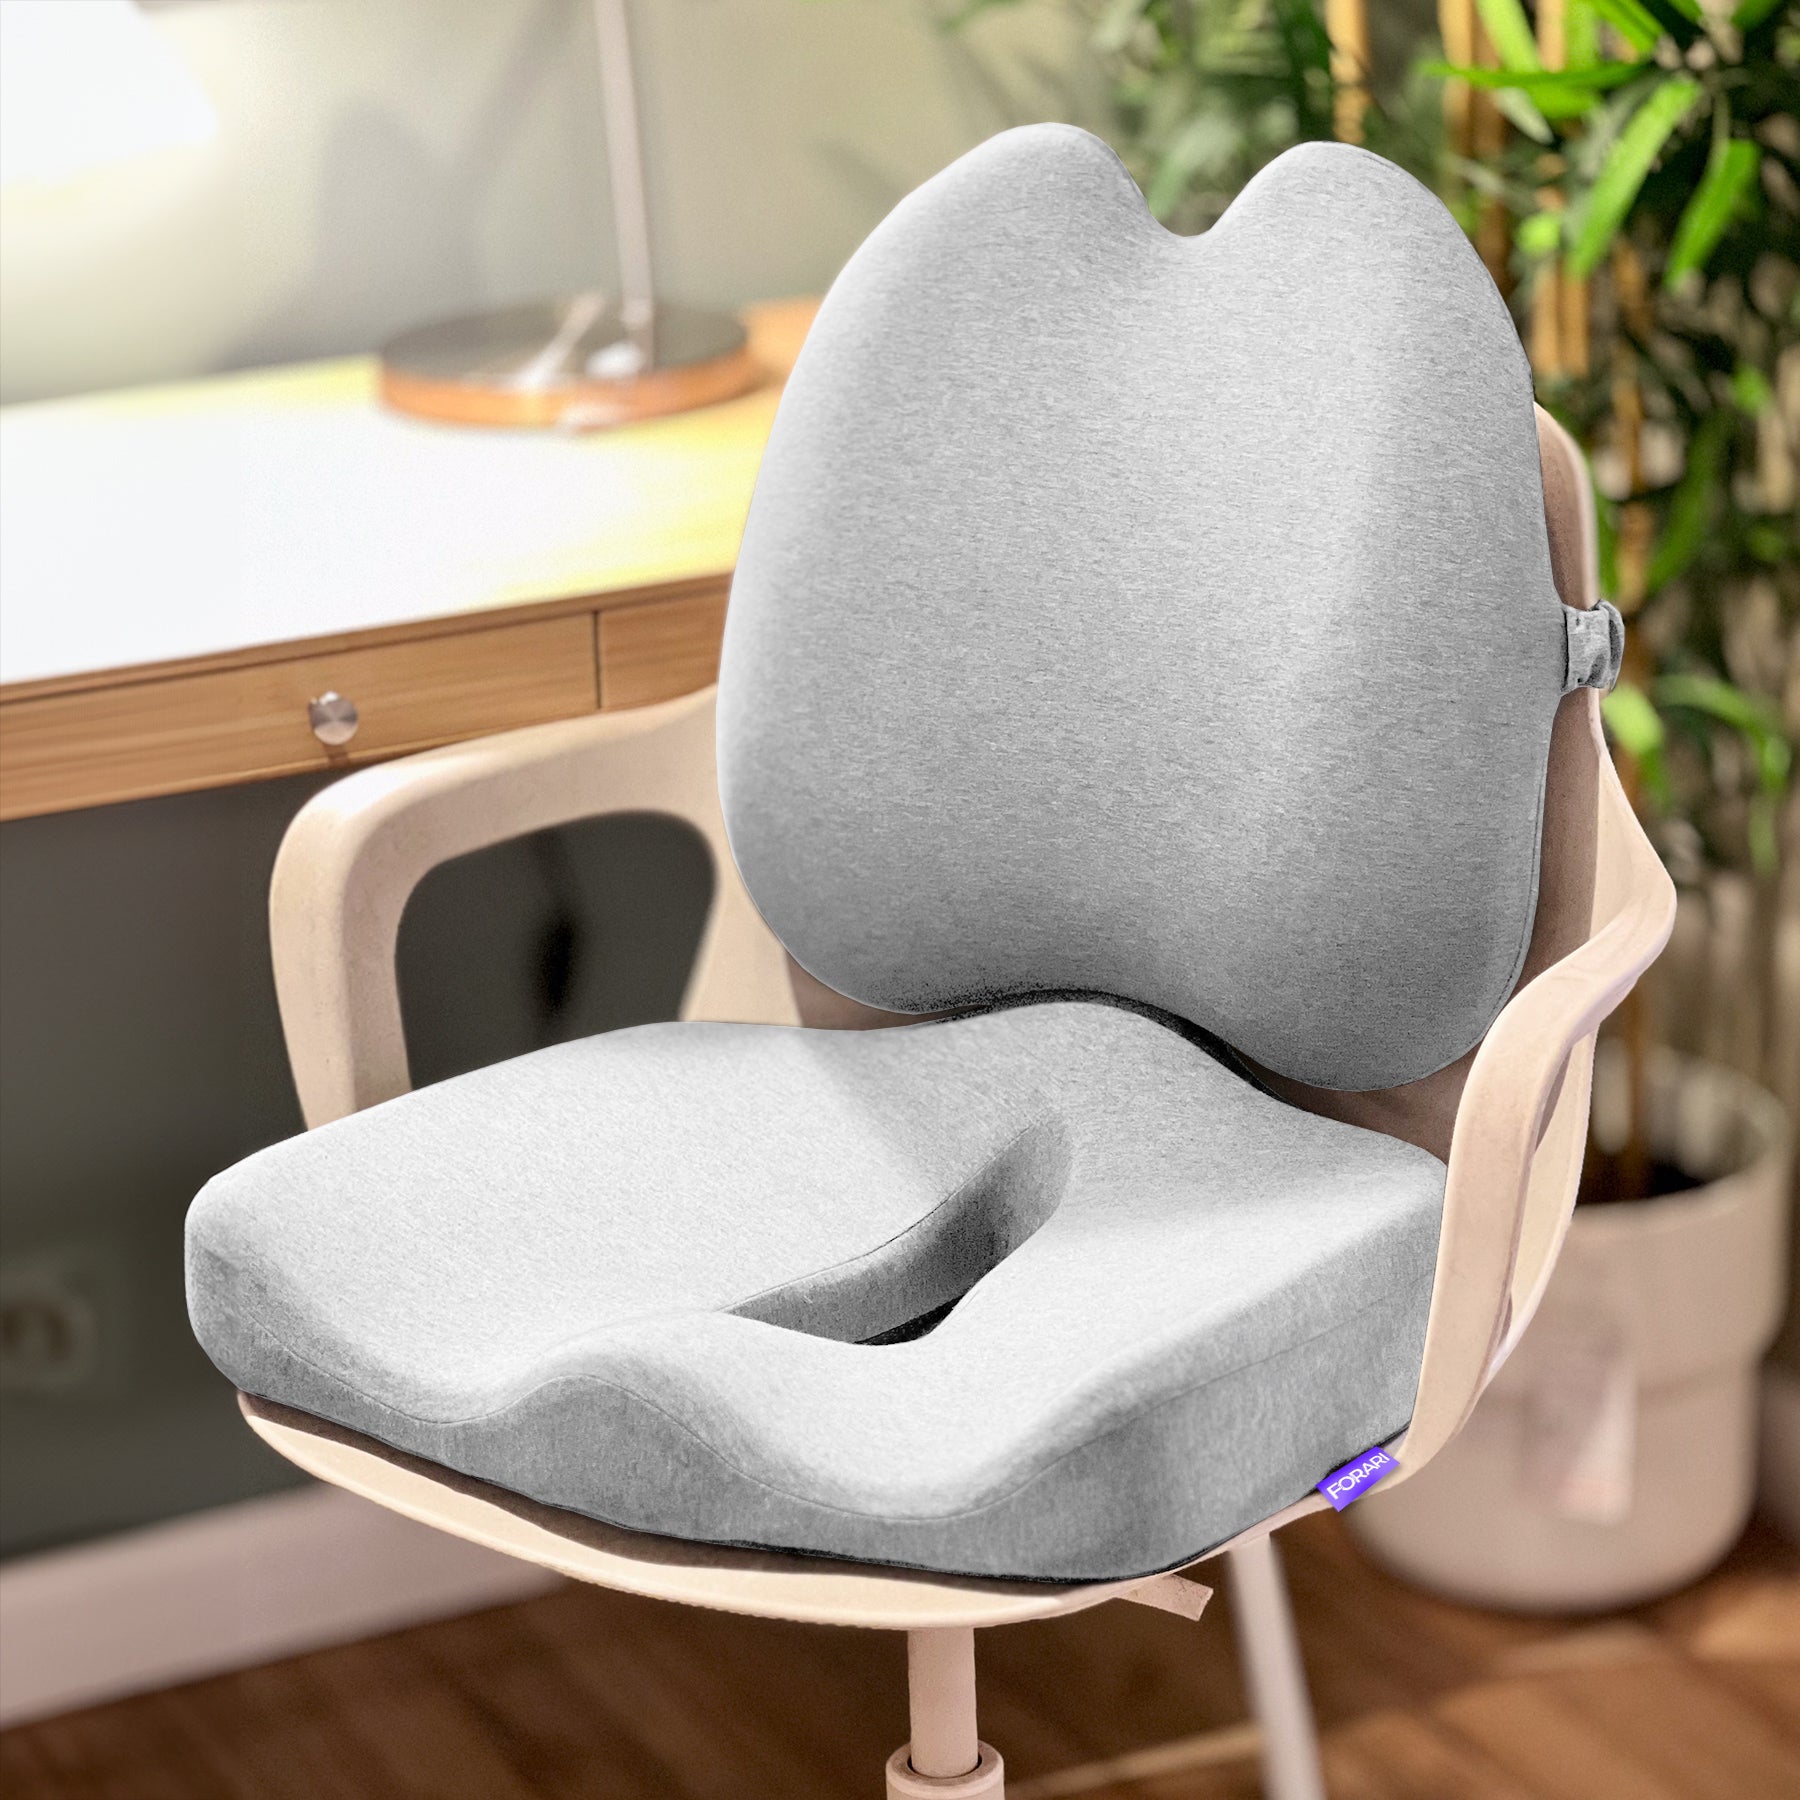 Ergonomic Seat Cushion *Patented